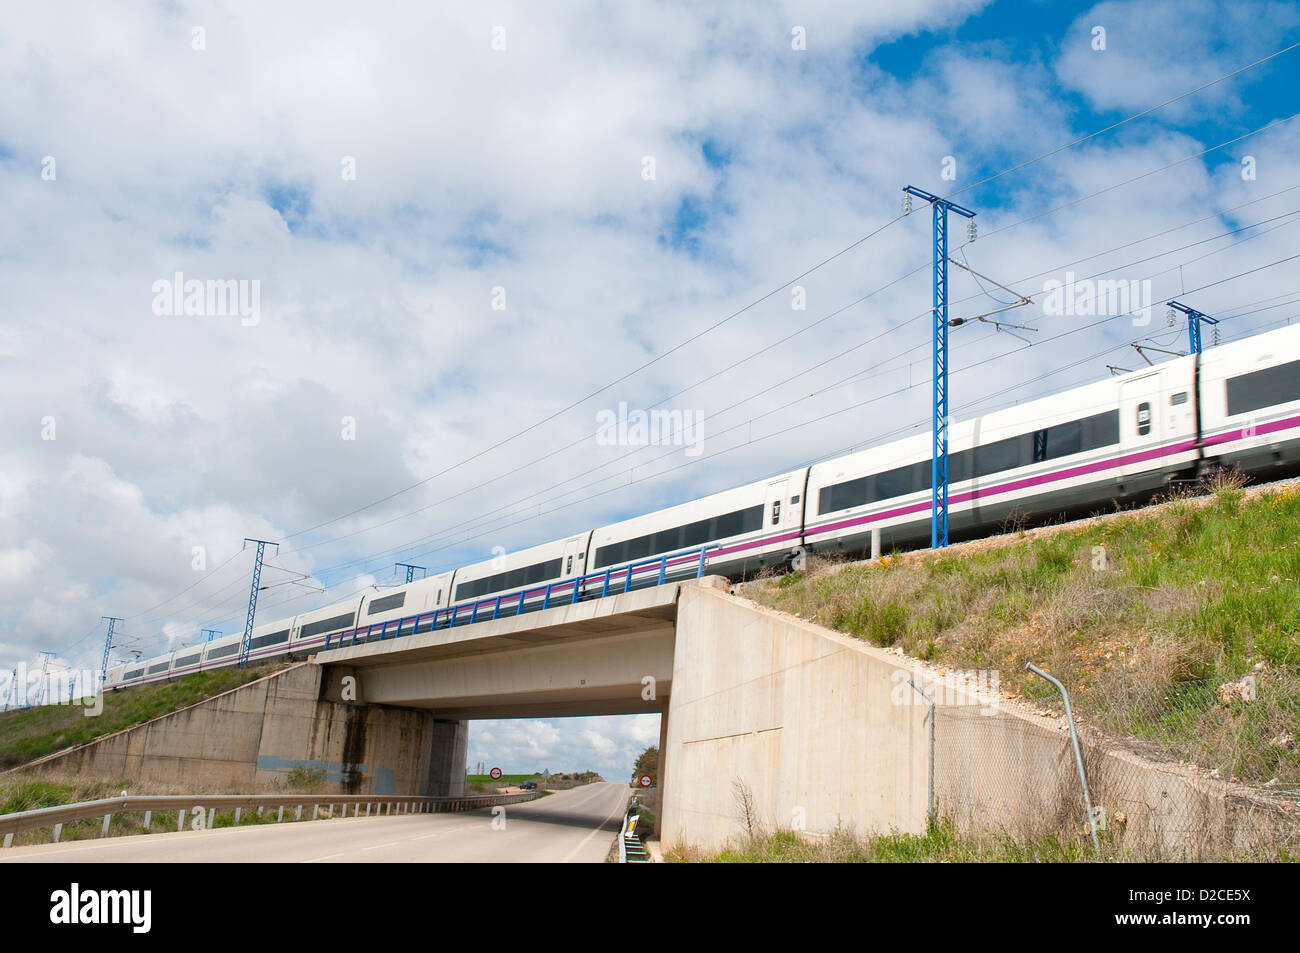 Tren español rapido fotografías e imágenes de alta resolución - Alamy